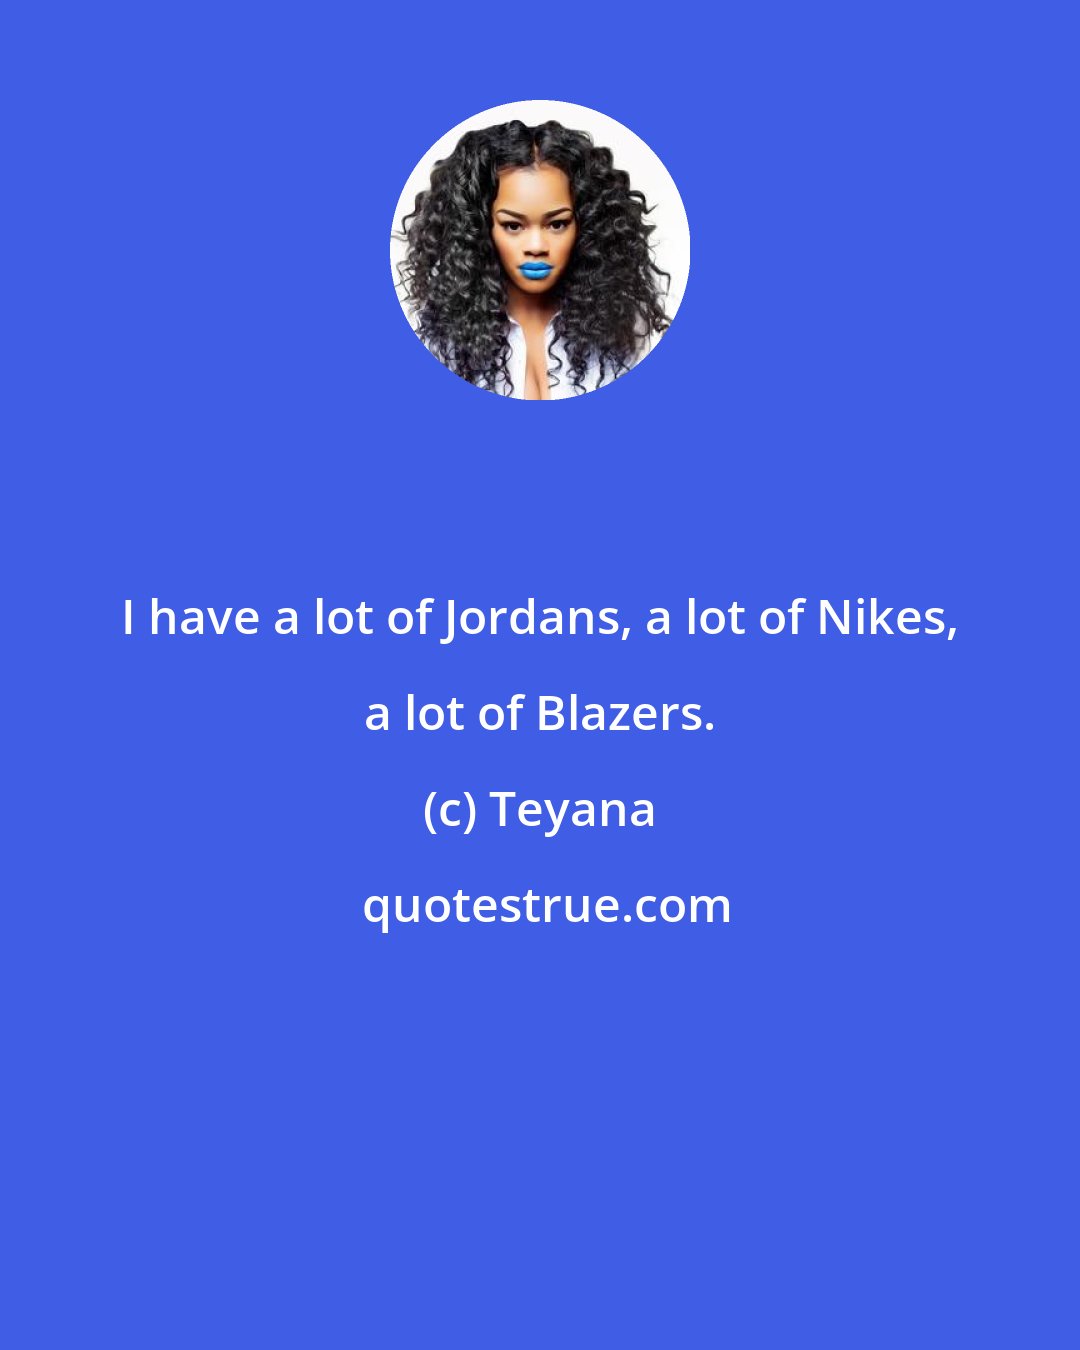 Teyana: I have a lot of Jordans, a lot of Nikes, a lot of Blazers.